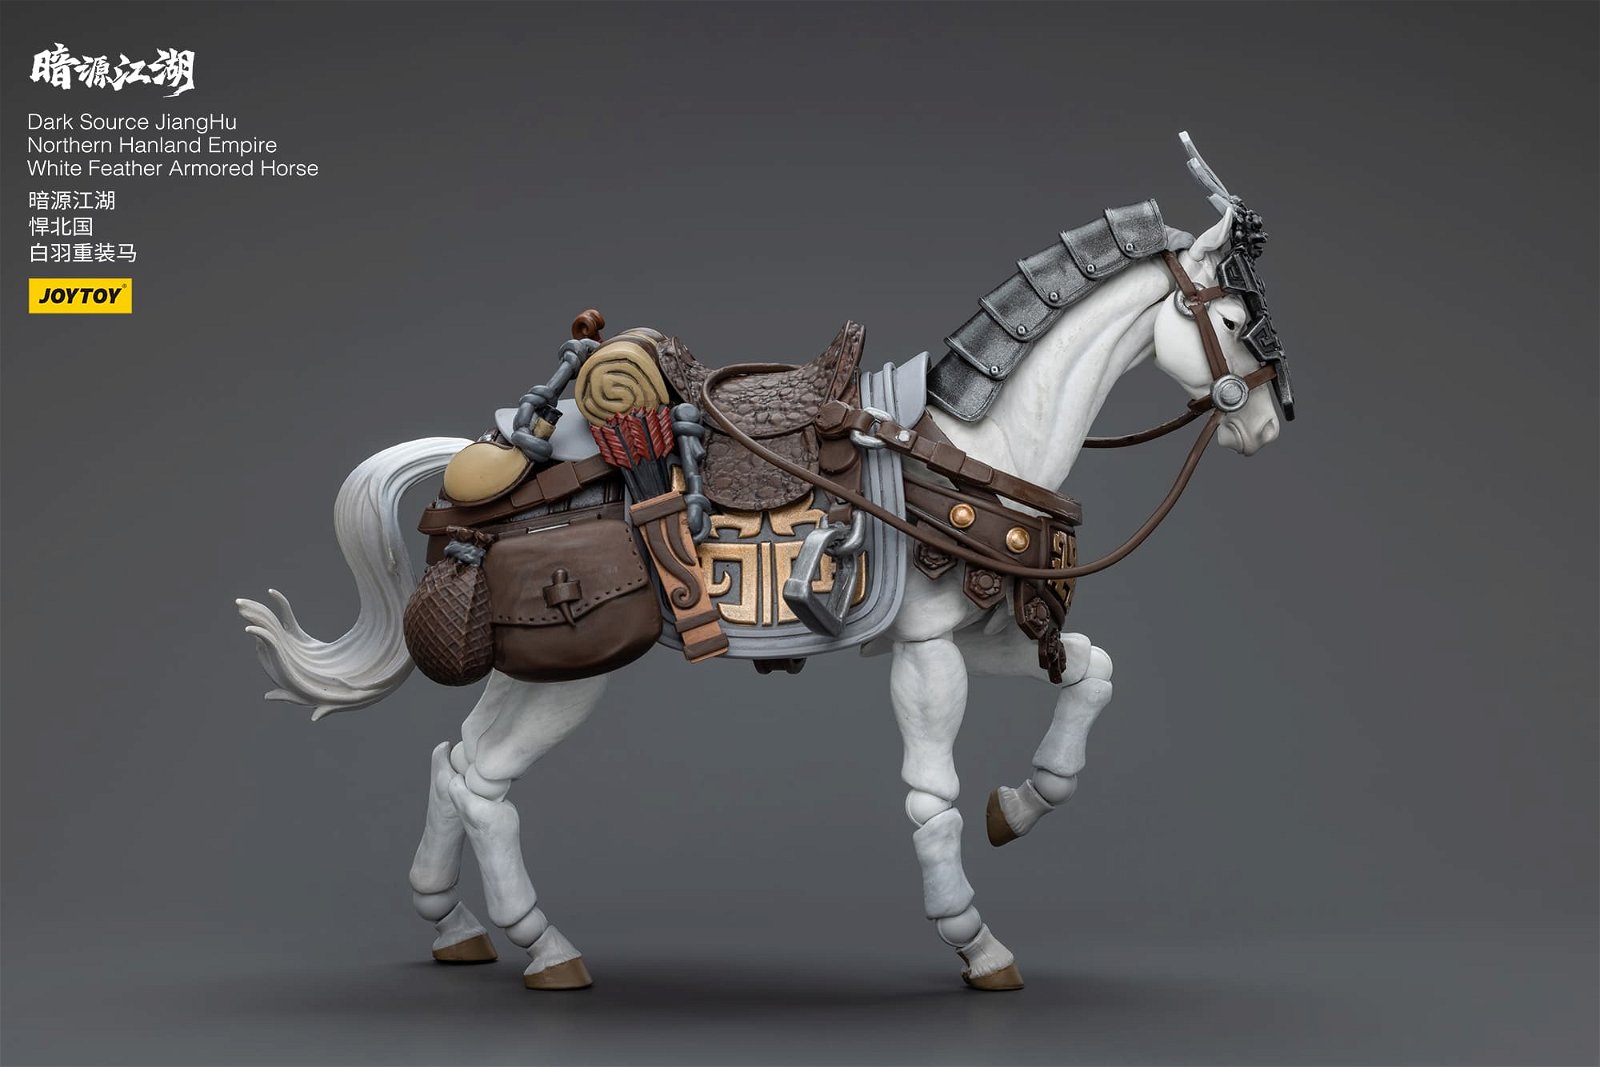 JOYTOY Dark Source JiangHu Northern Hanland Empire White Feather Armored Horse 2 - Joytoy Figure